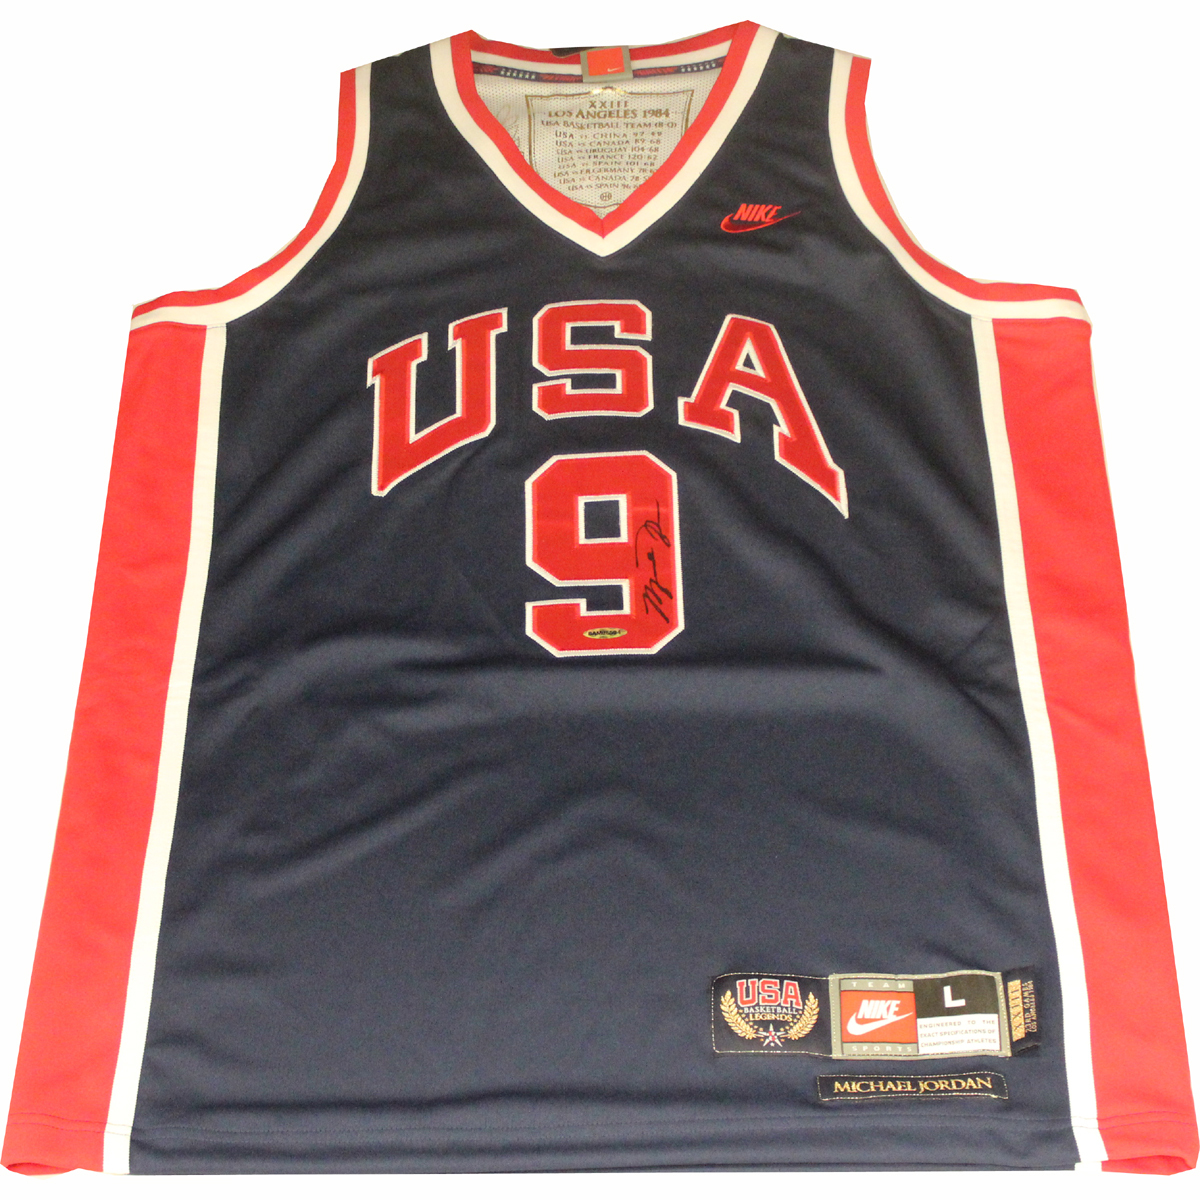 Michael Jordan Team USA Autographed